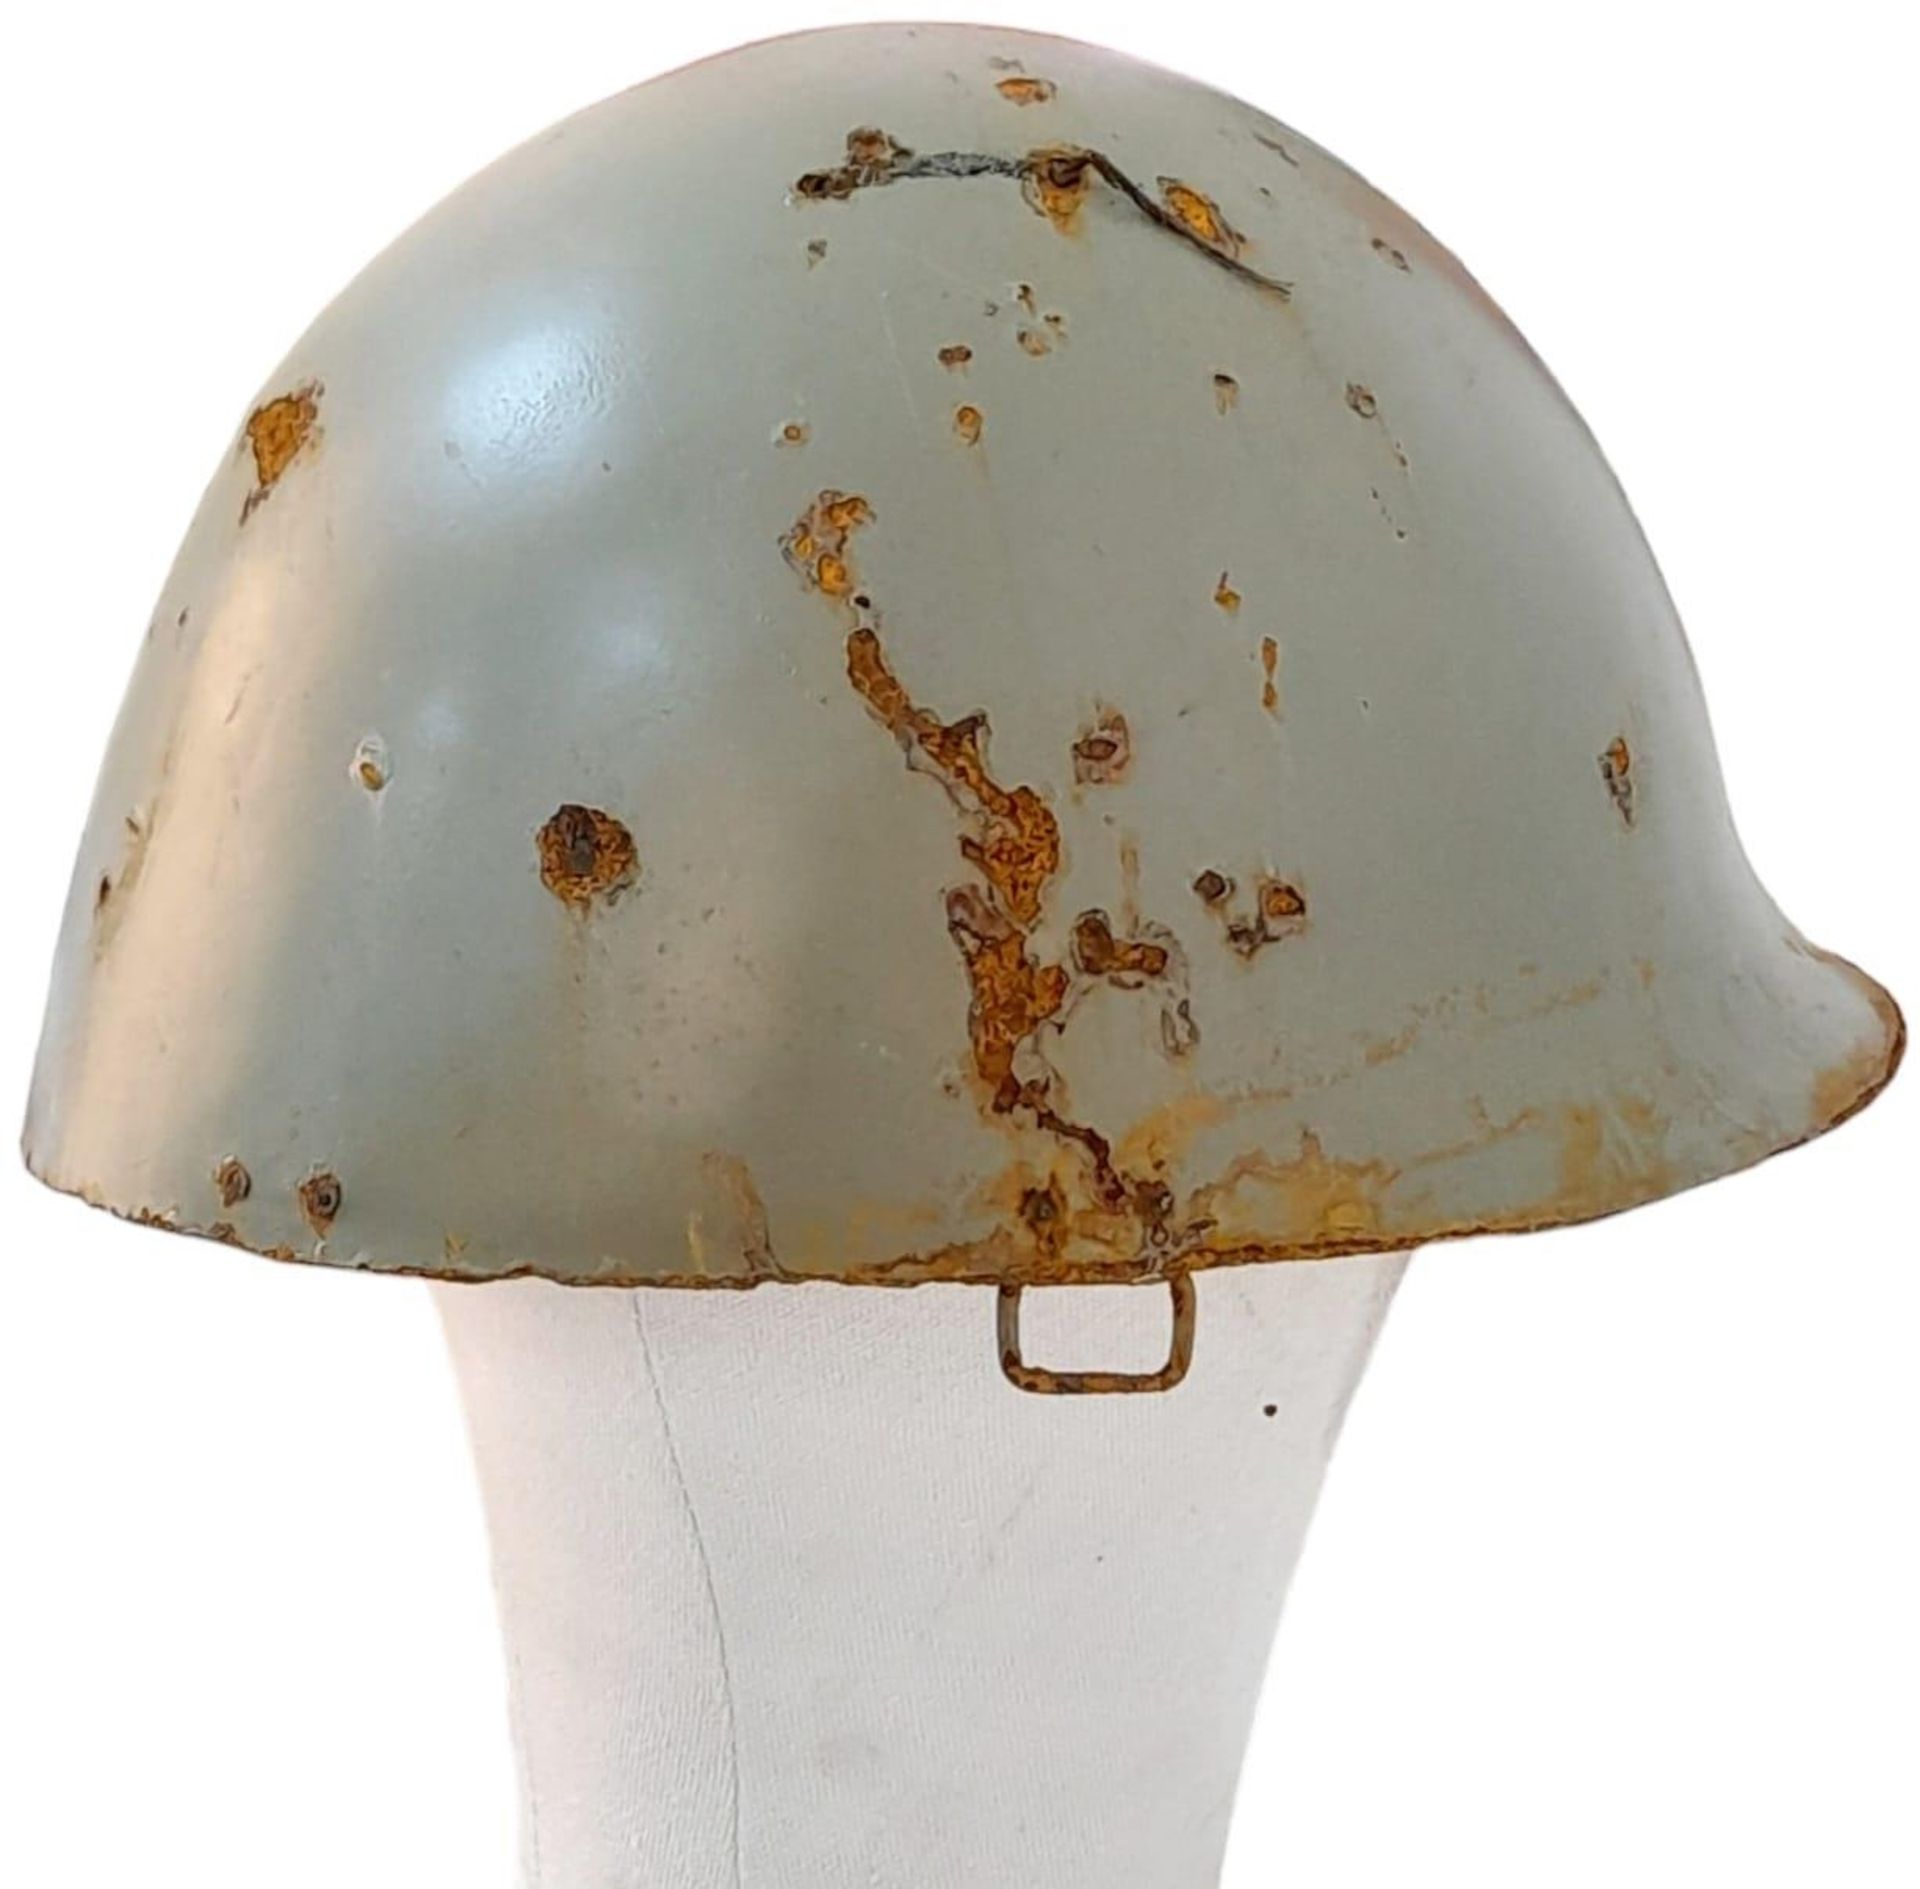 Rare WW2 Japanese Rare Rikusentai Paratrooper Helmet (no badge or liner) Part of the Special Naval